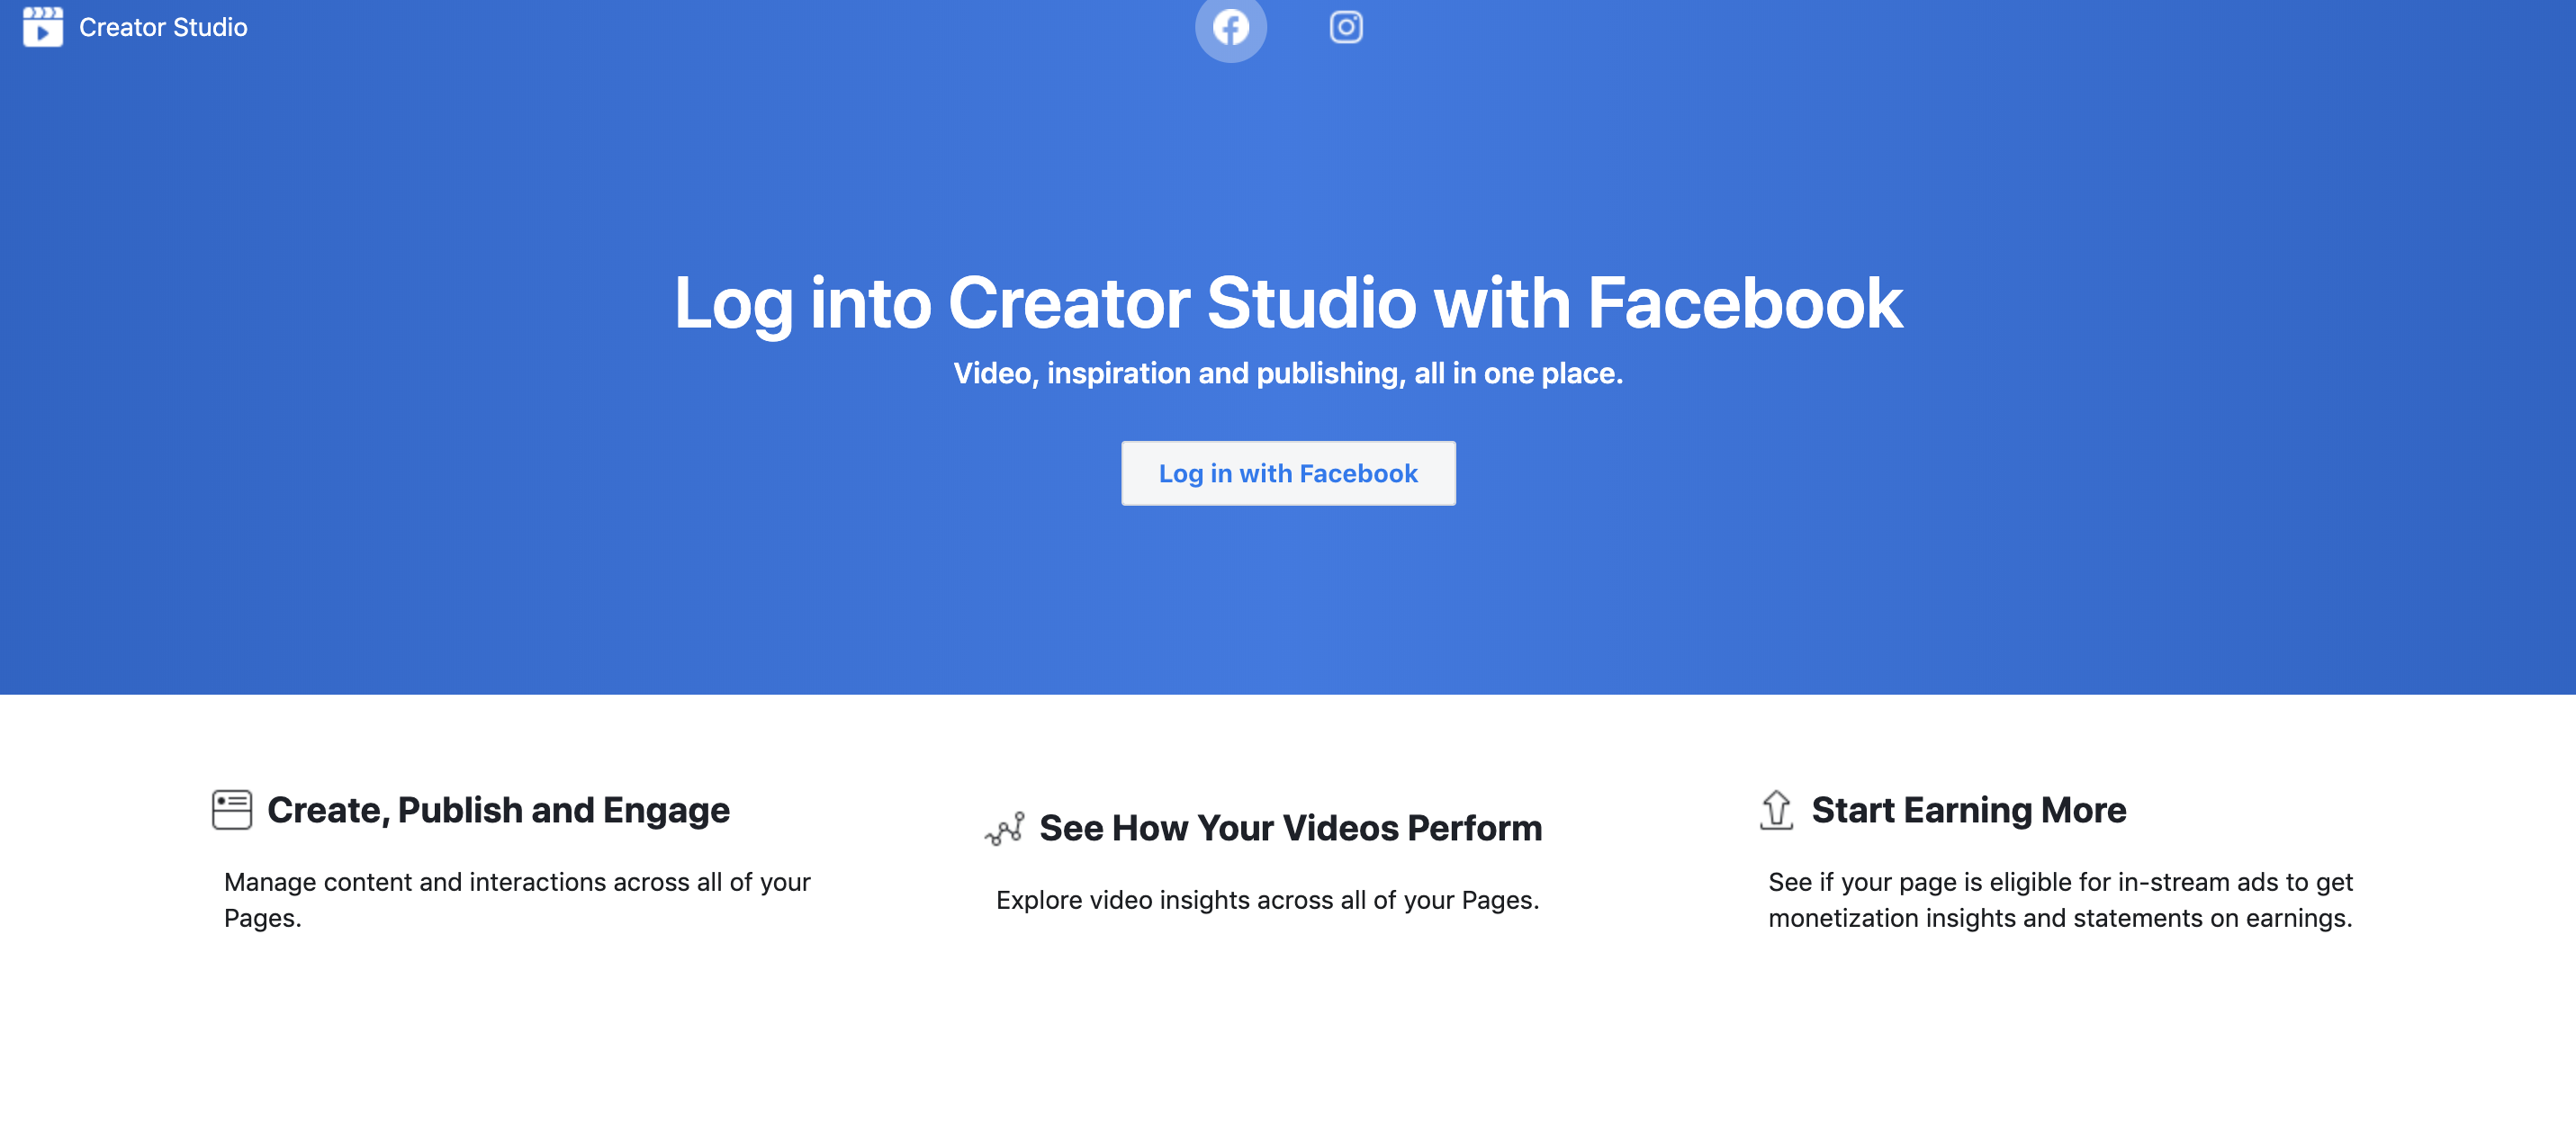 log into creator studio with facebook (1)